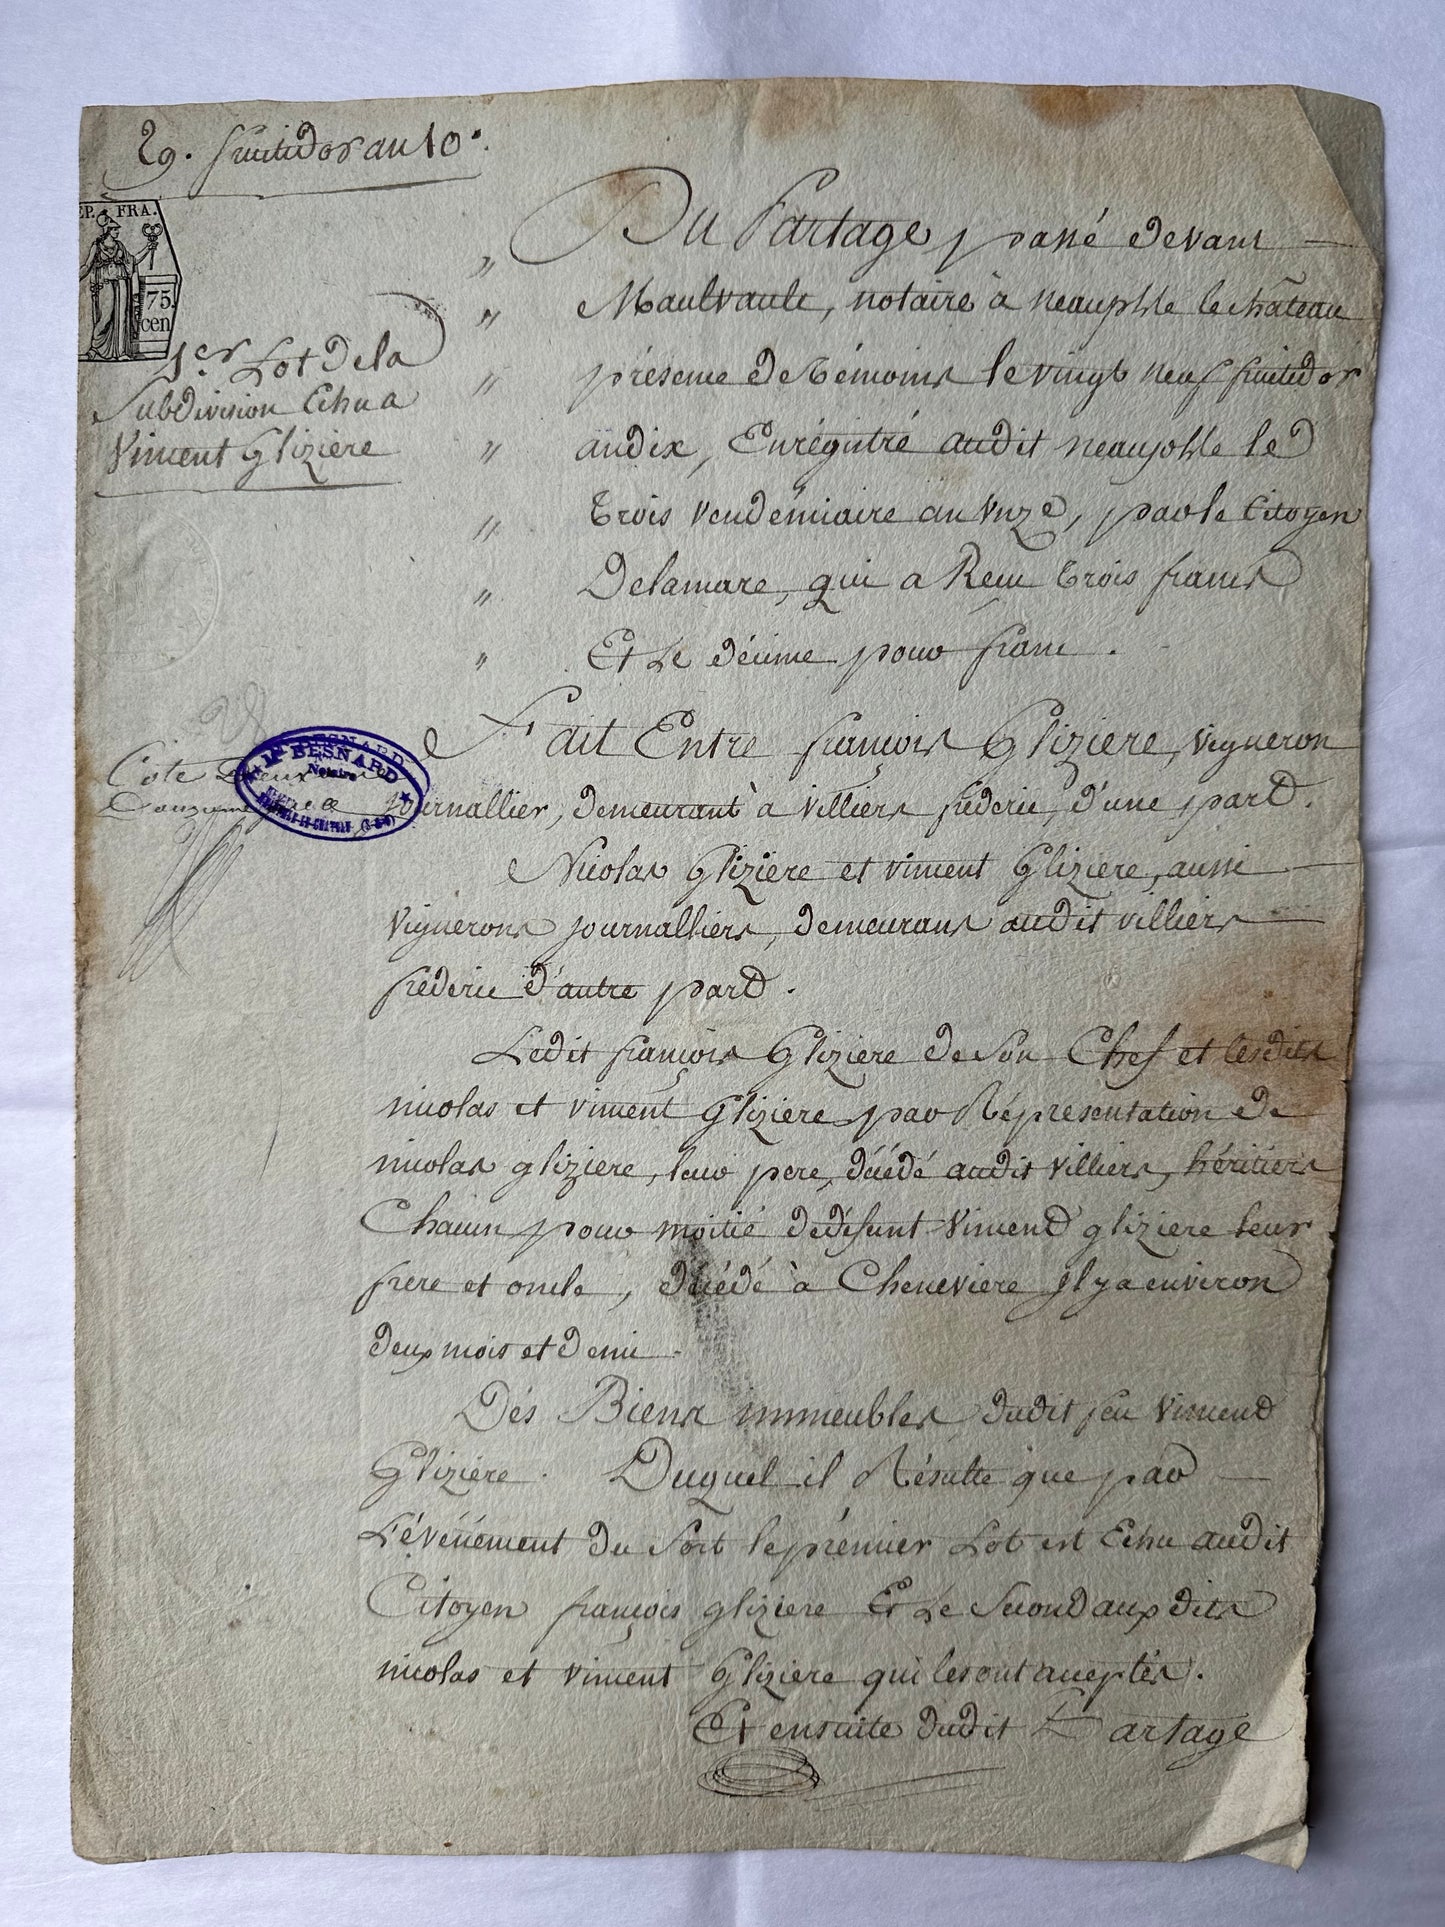 1802 French Revolution Era Legal Manuscript